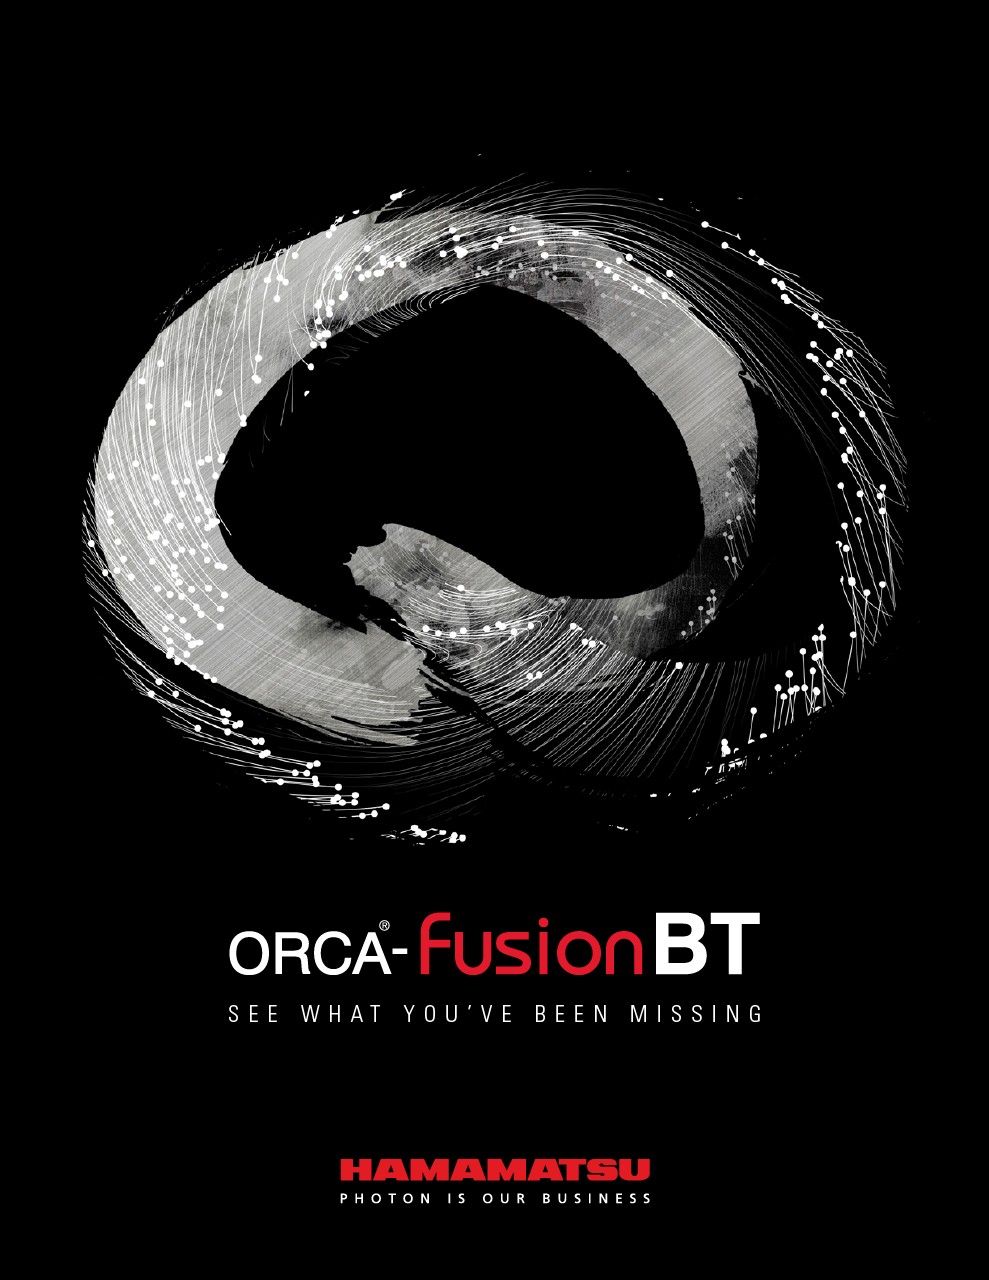 ORCA-Fusion BT Digital CMOS camera C15440-20UP for life science